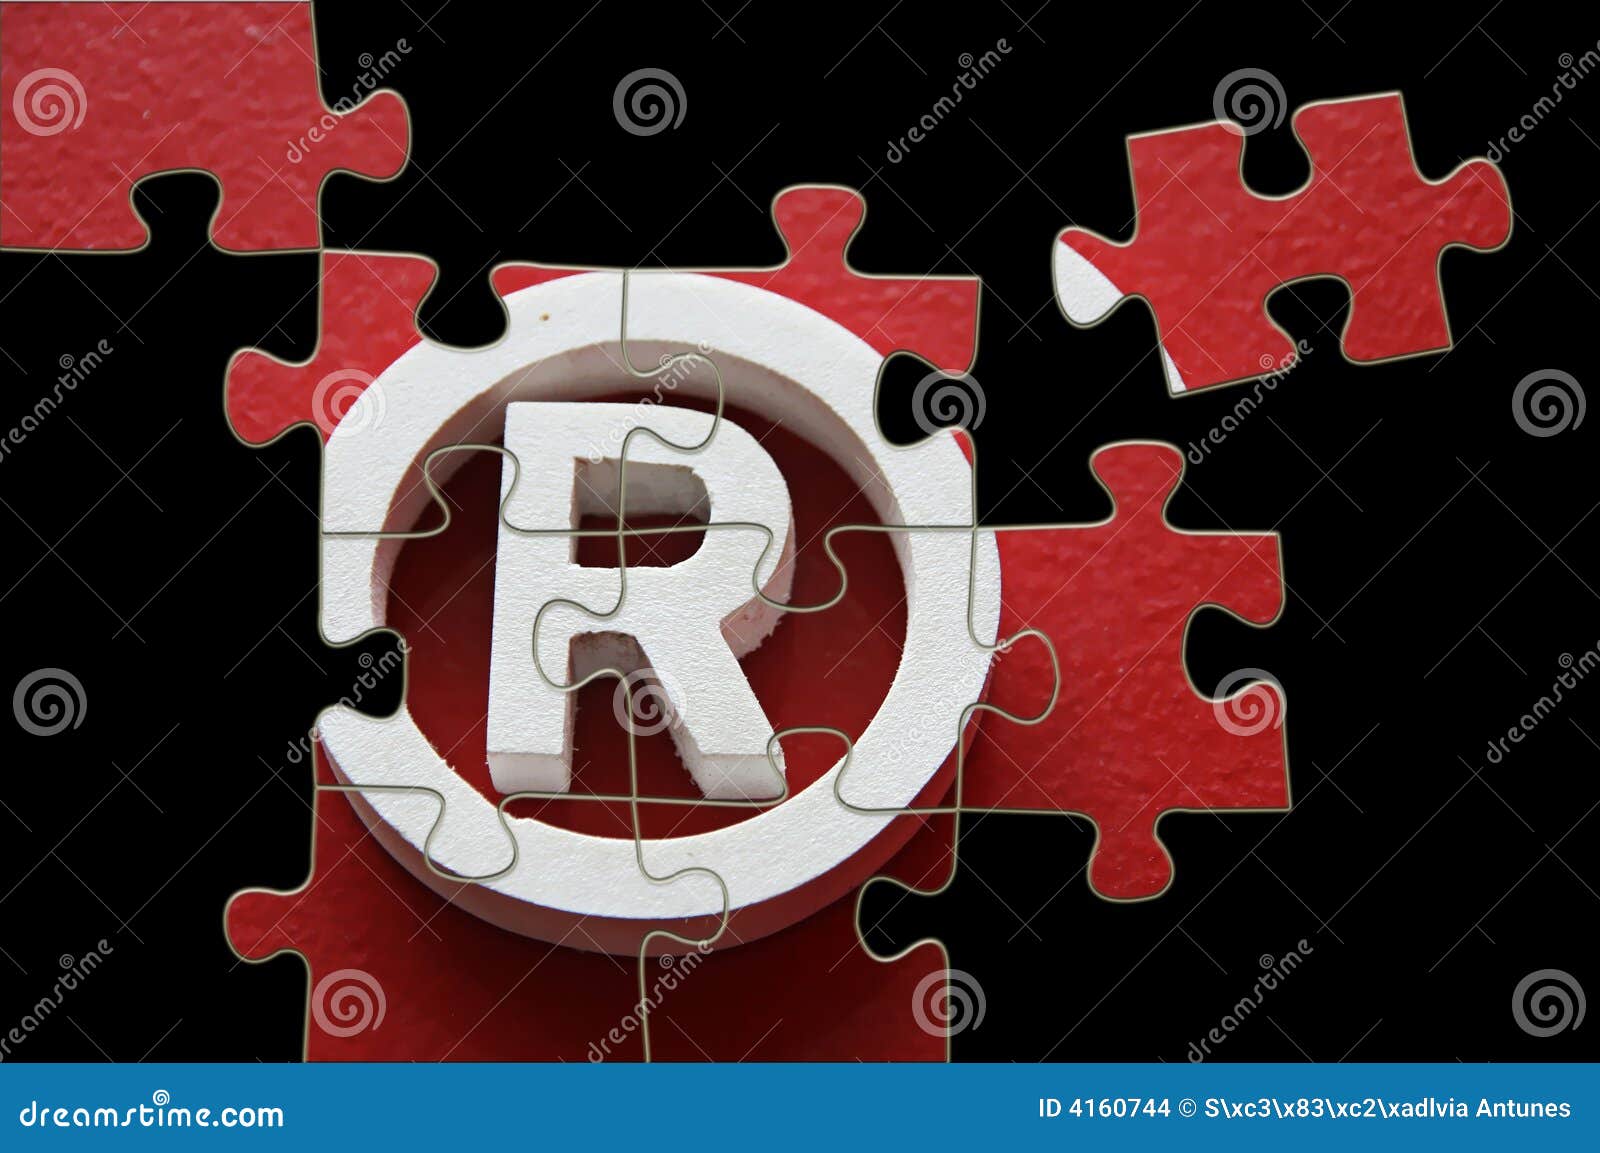 r trademark - puzzle incomplete